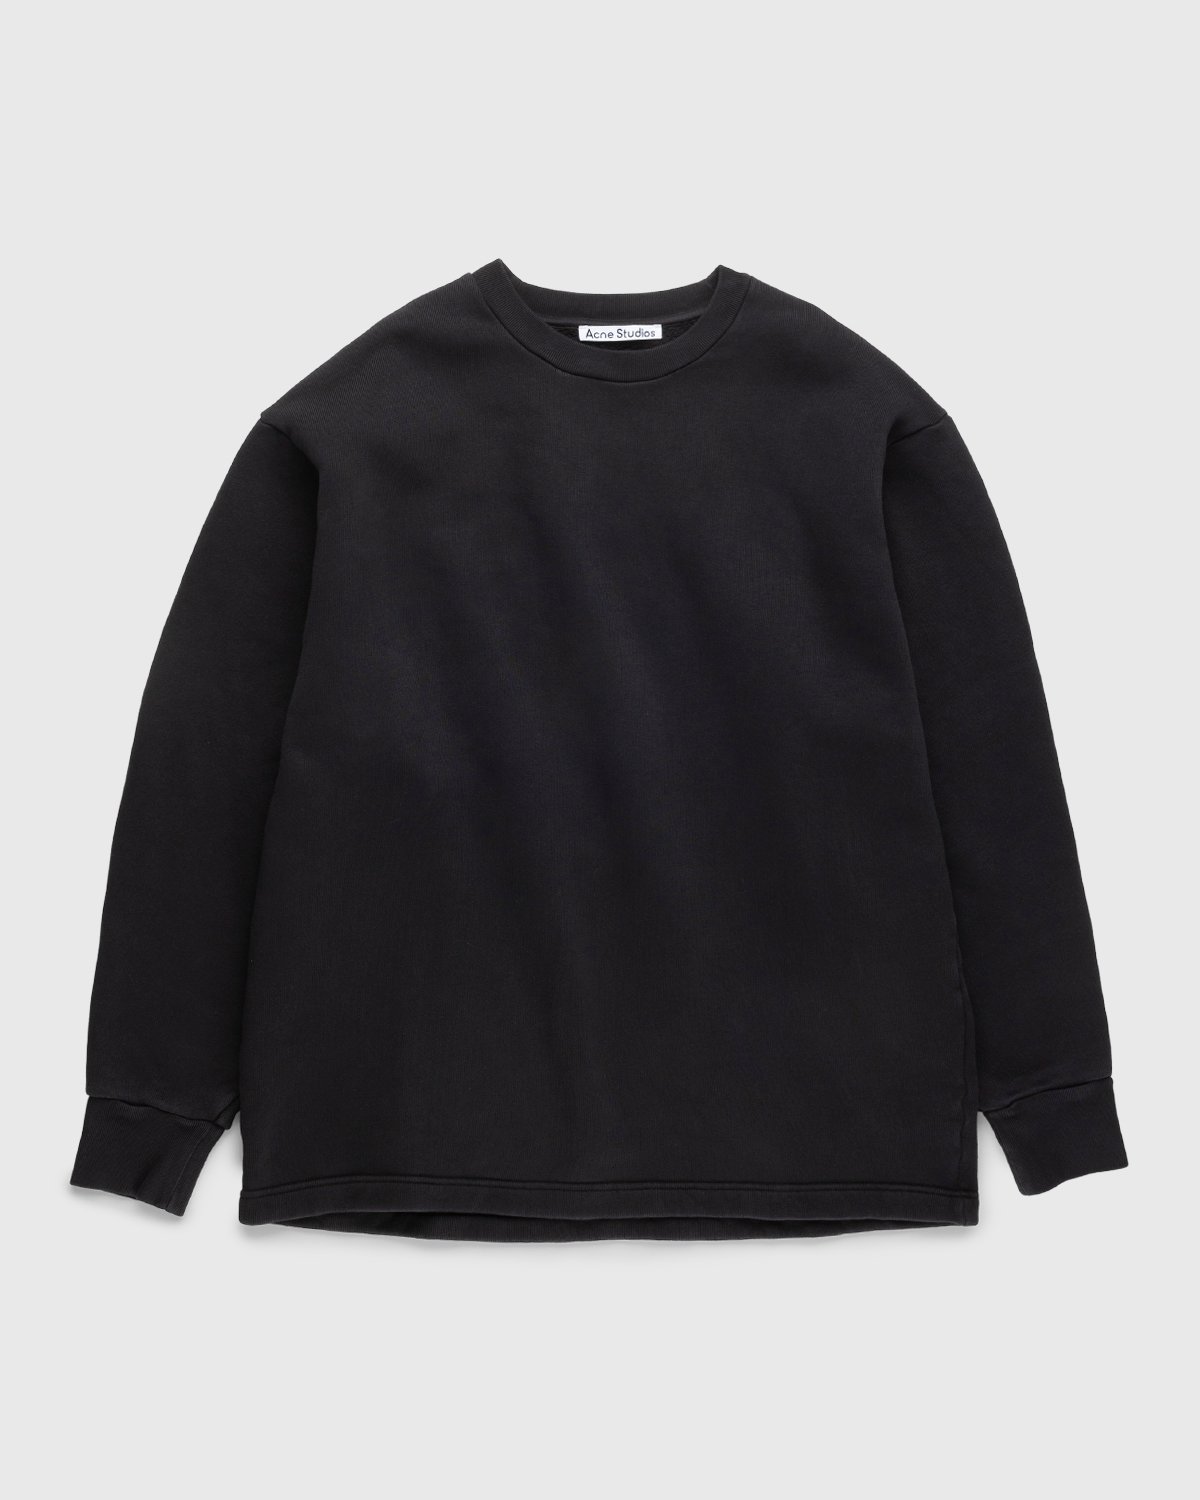 Acne Studios - Logo Sweatshirt Black - Clothing - Black - Image 2